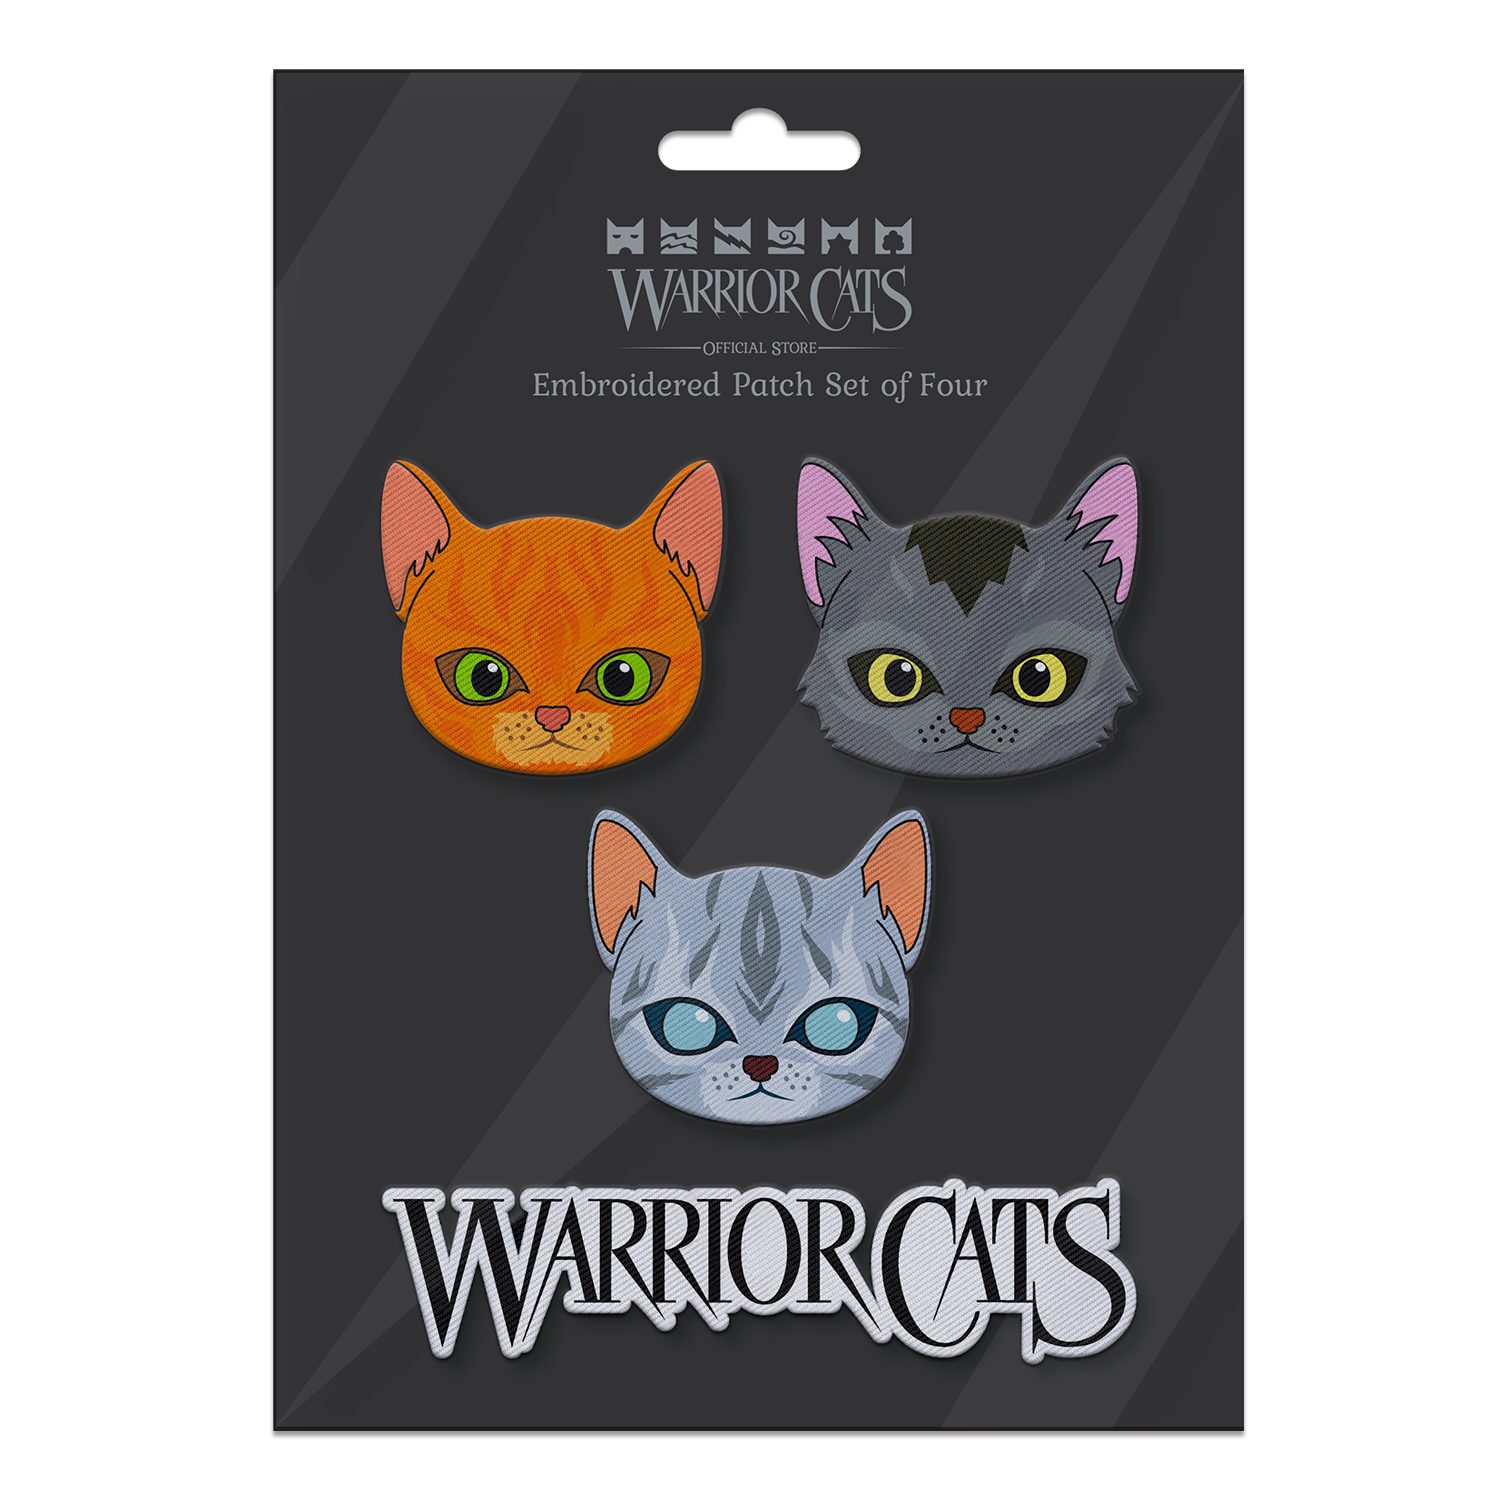 Warrior Cats Official EU store